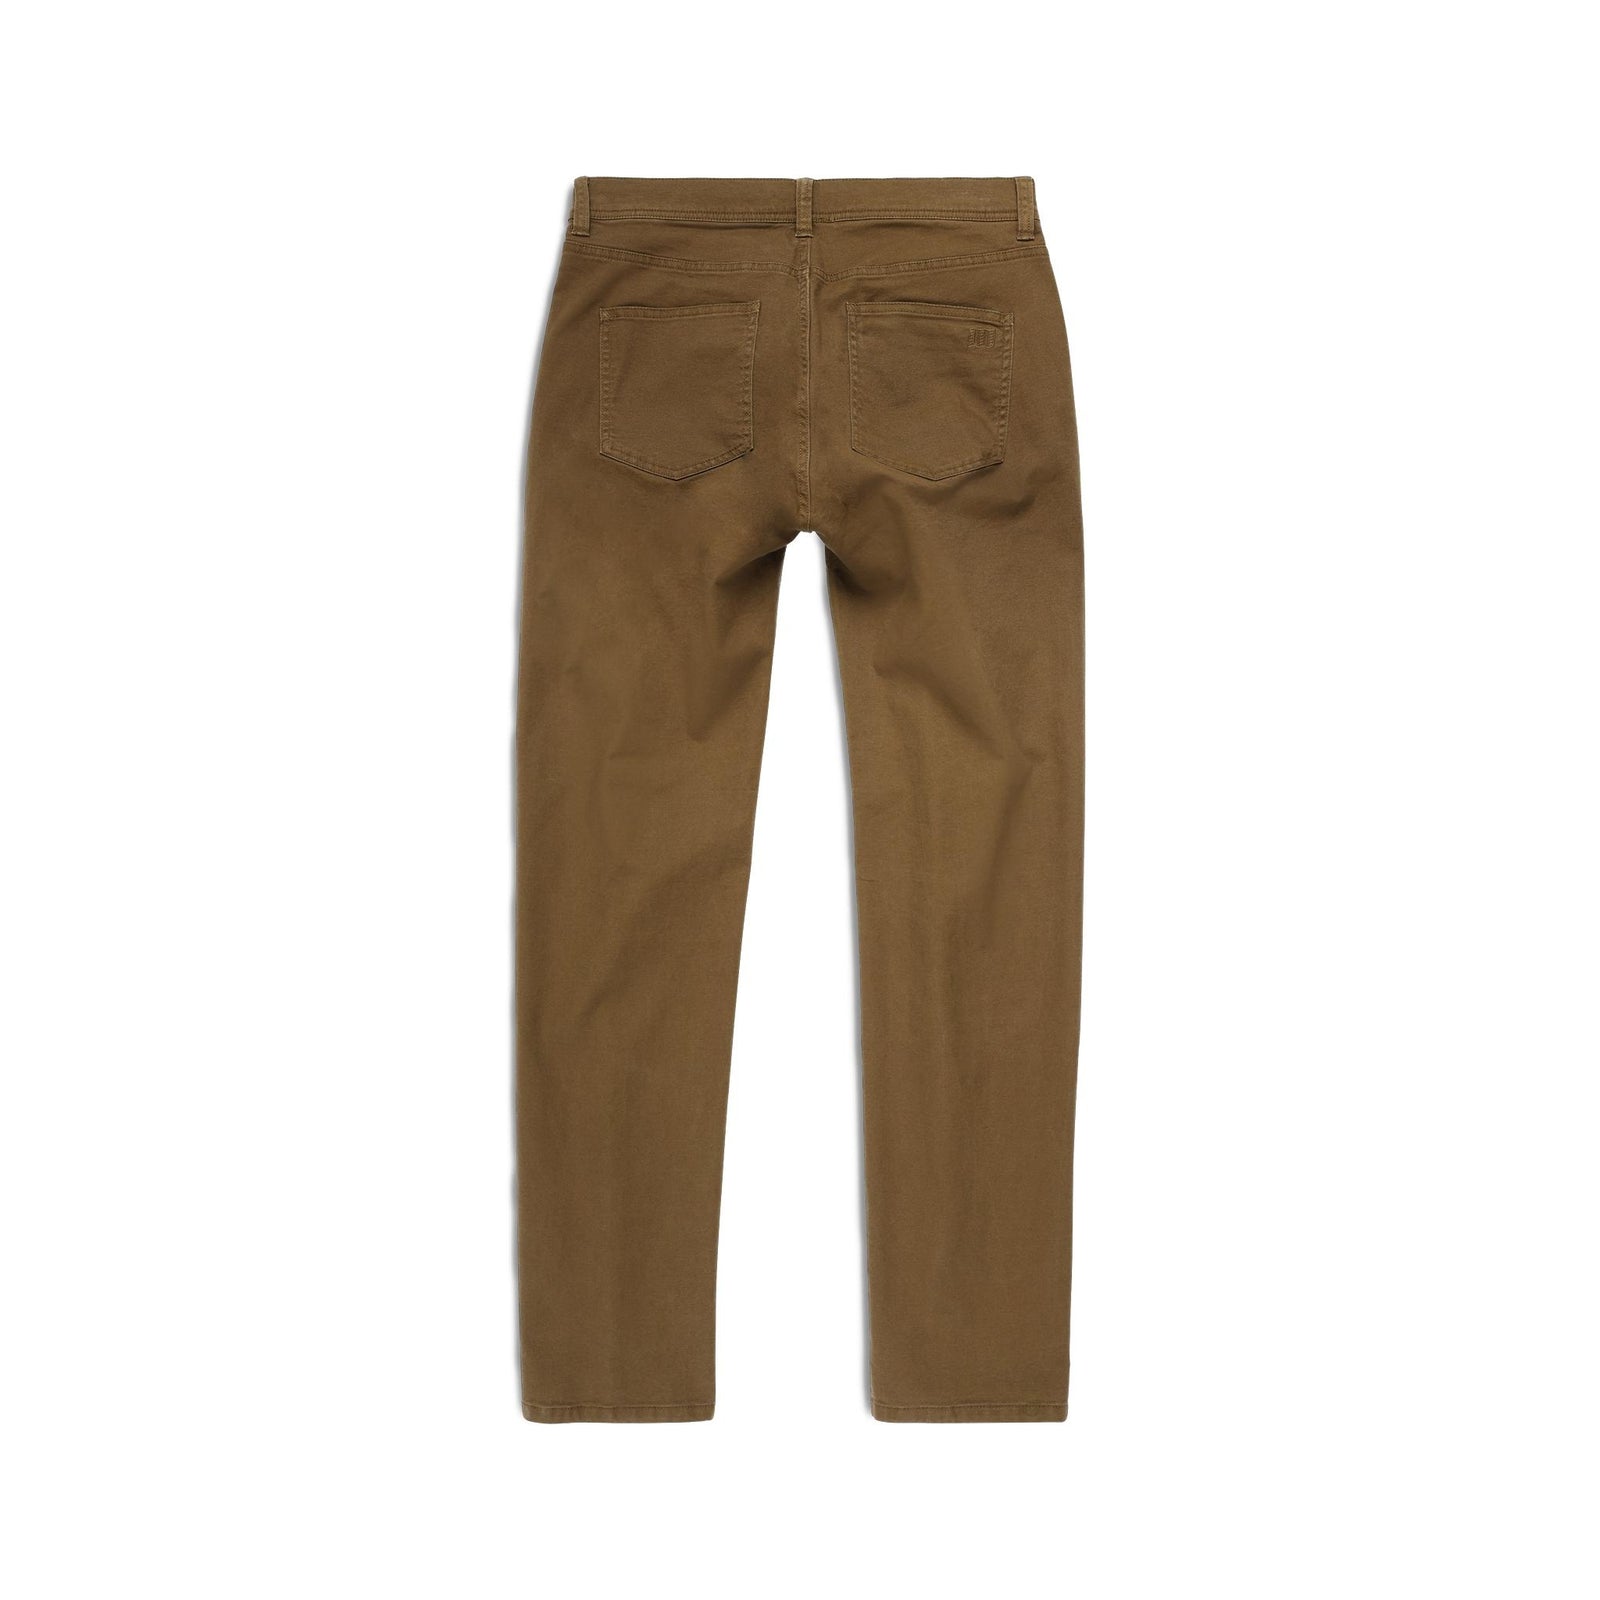 Back View of Topo Designs Dirt 5-Pocket Pants - Men's in "Desert Palm"